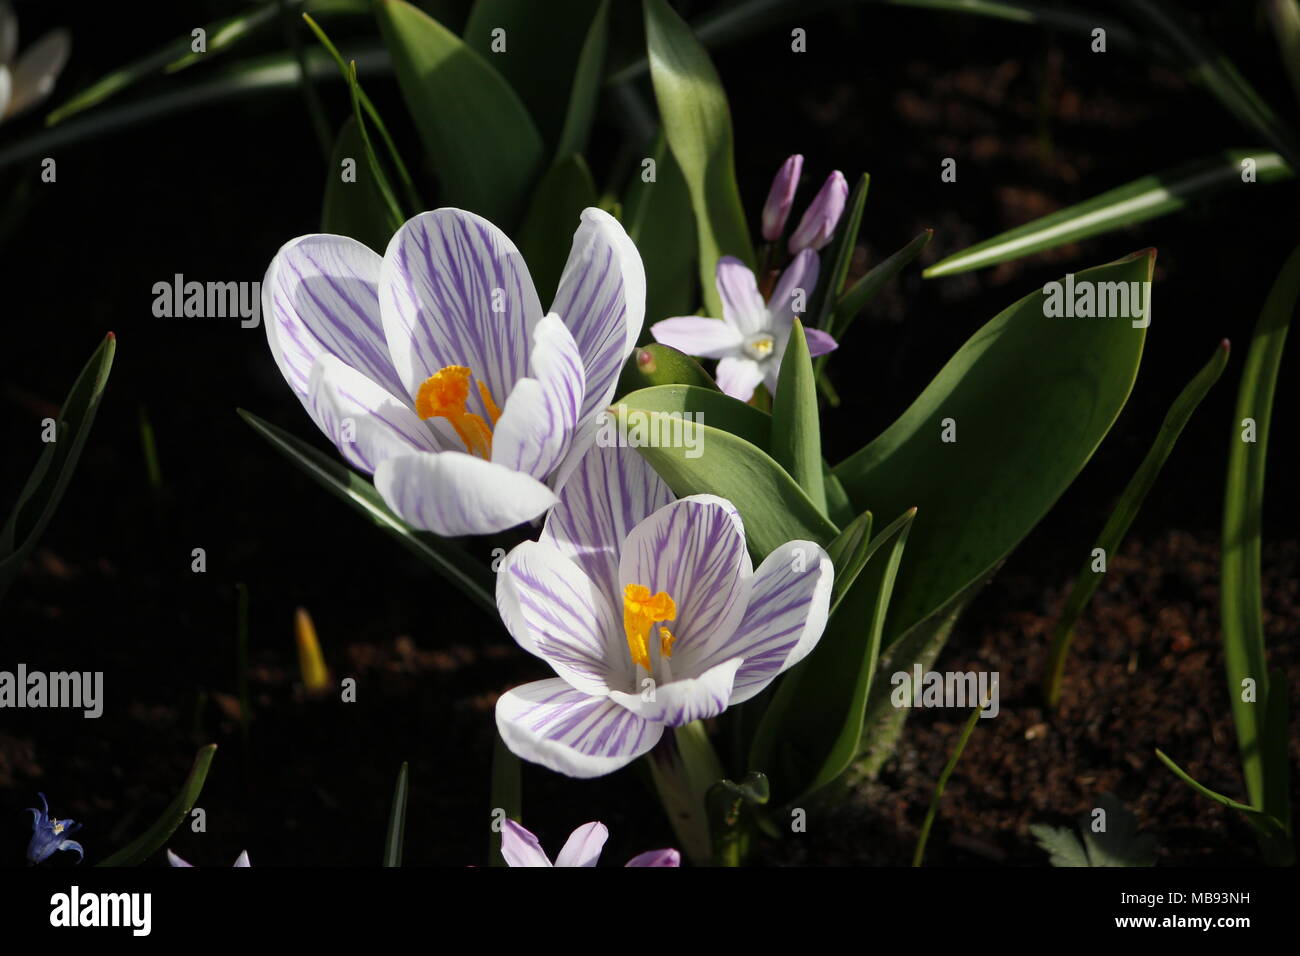 focus on the crocus flower Stock Photo